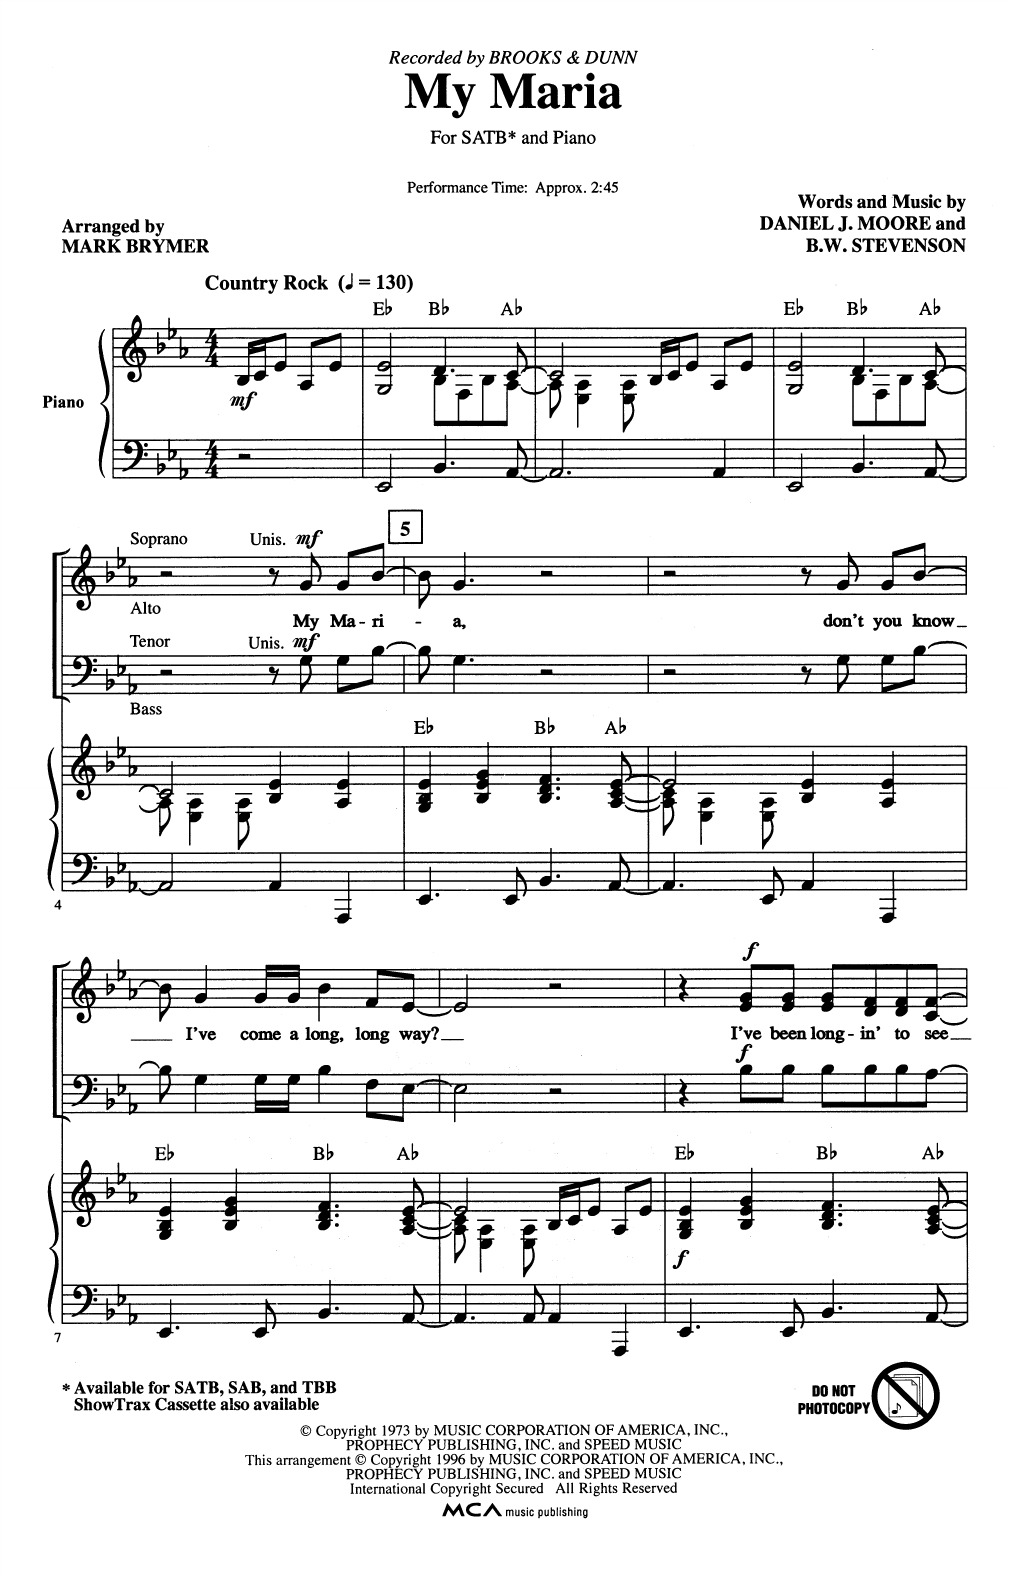 Brooks & Dunn My Maria (arr. Mark Brymer) Sheet Music Notes & Chords for SAB Choir - Download or Print PDF